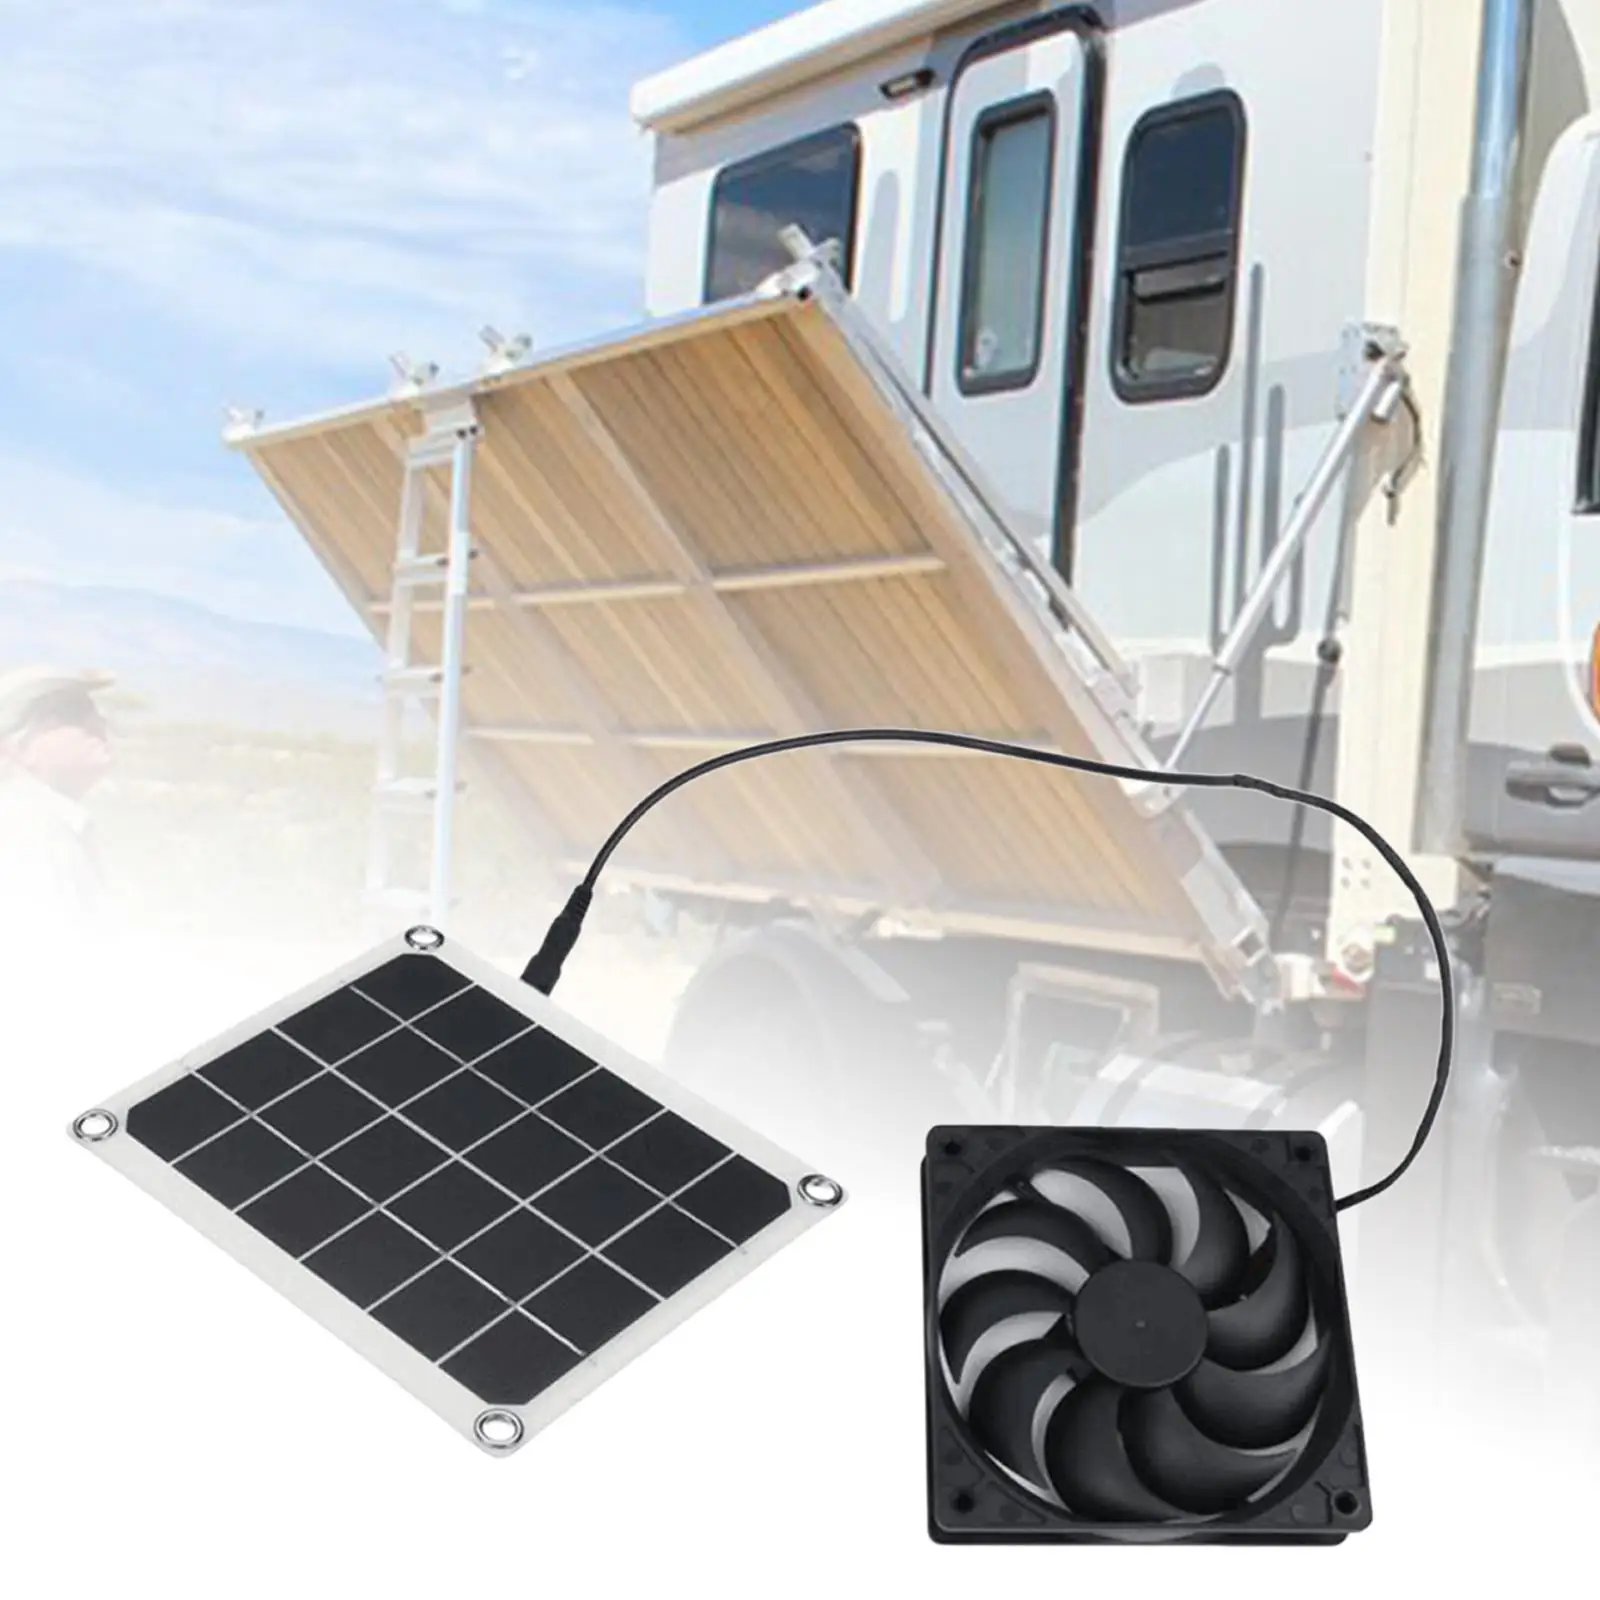 2x10W Solar Panel Powered Fan Mini Ventilator For Greenhouse Pet Chicken House